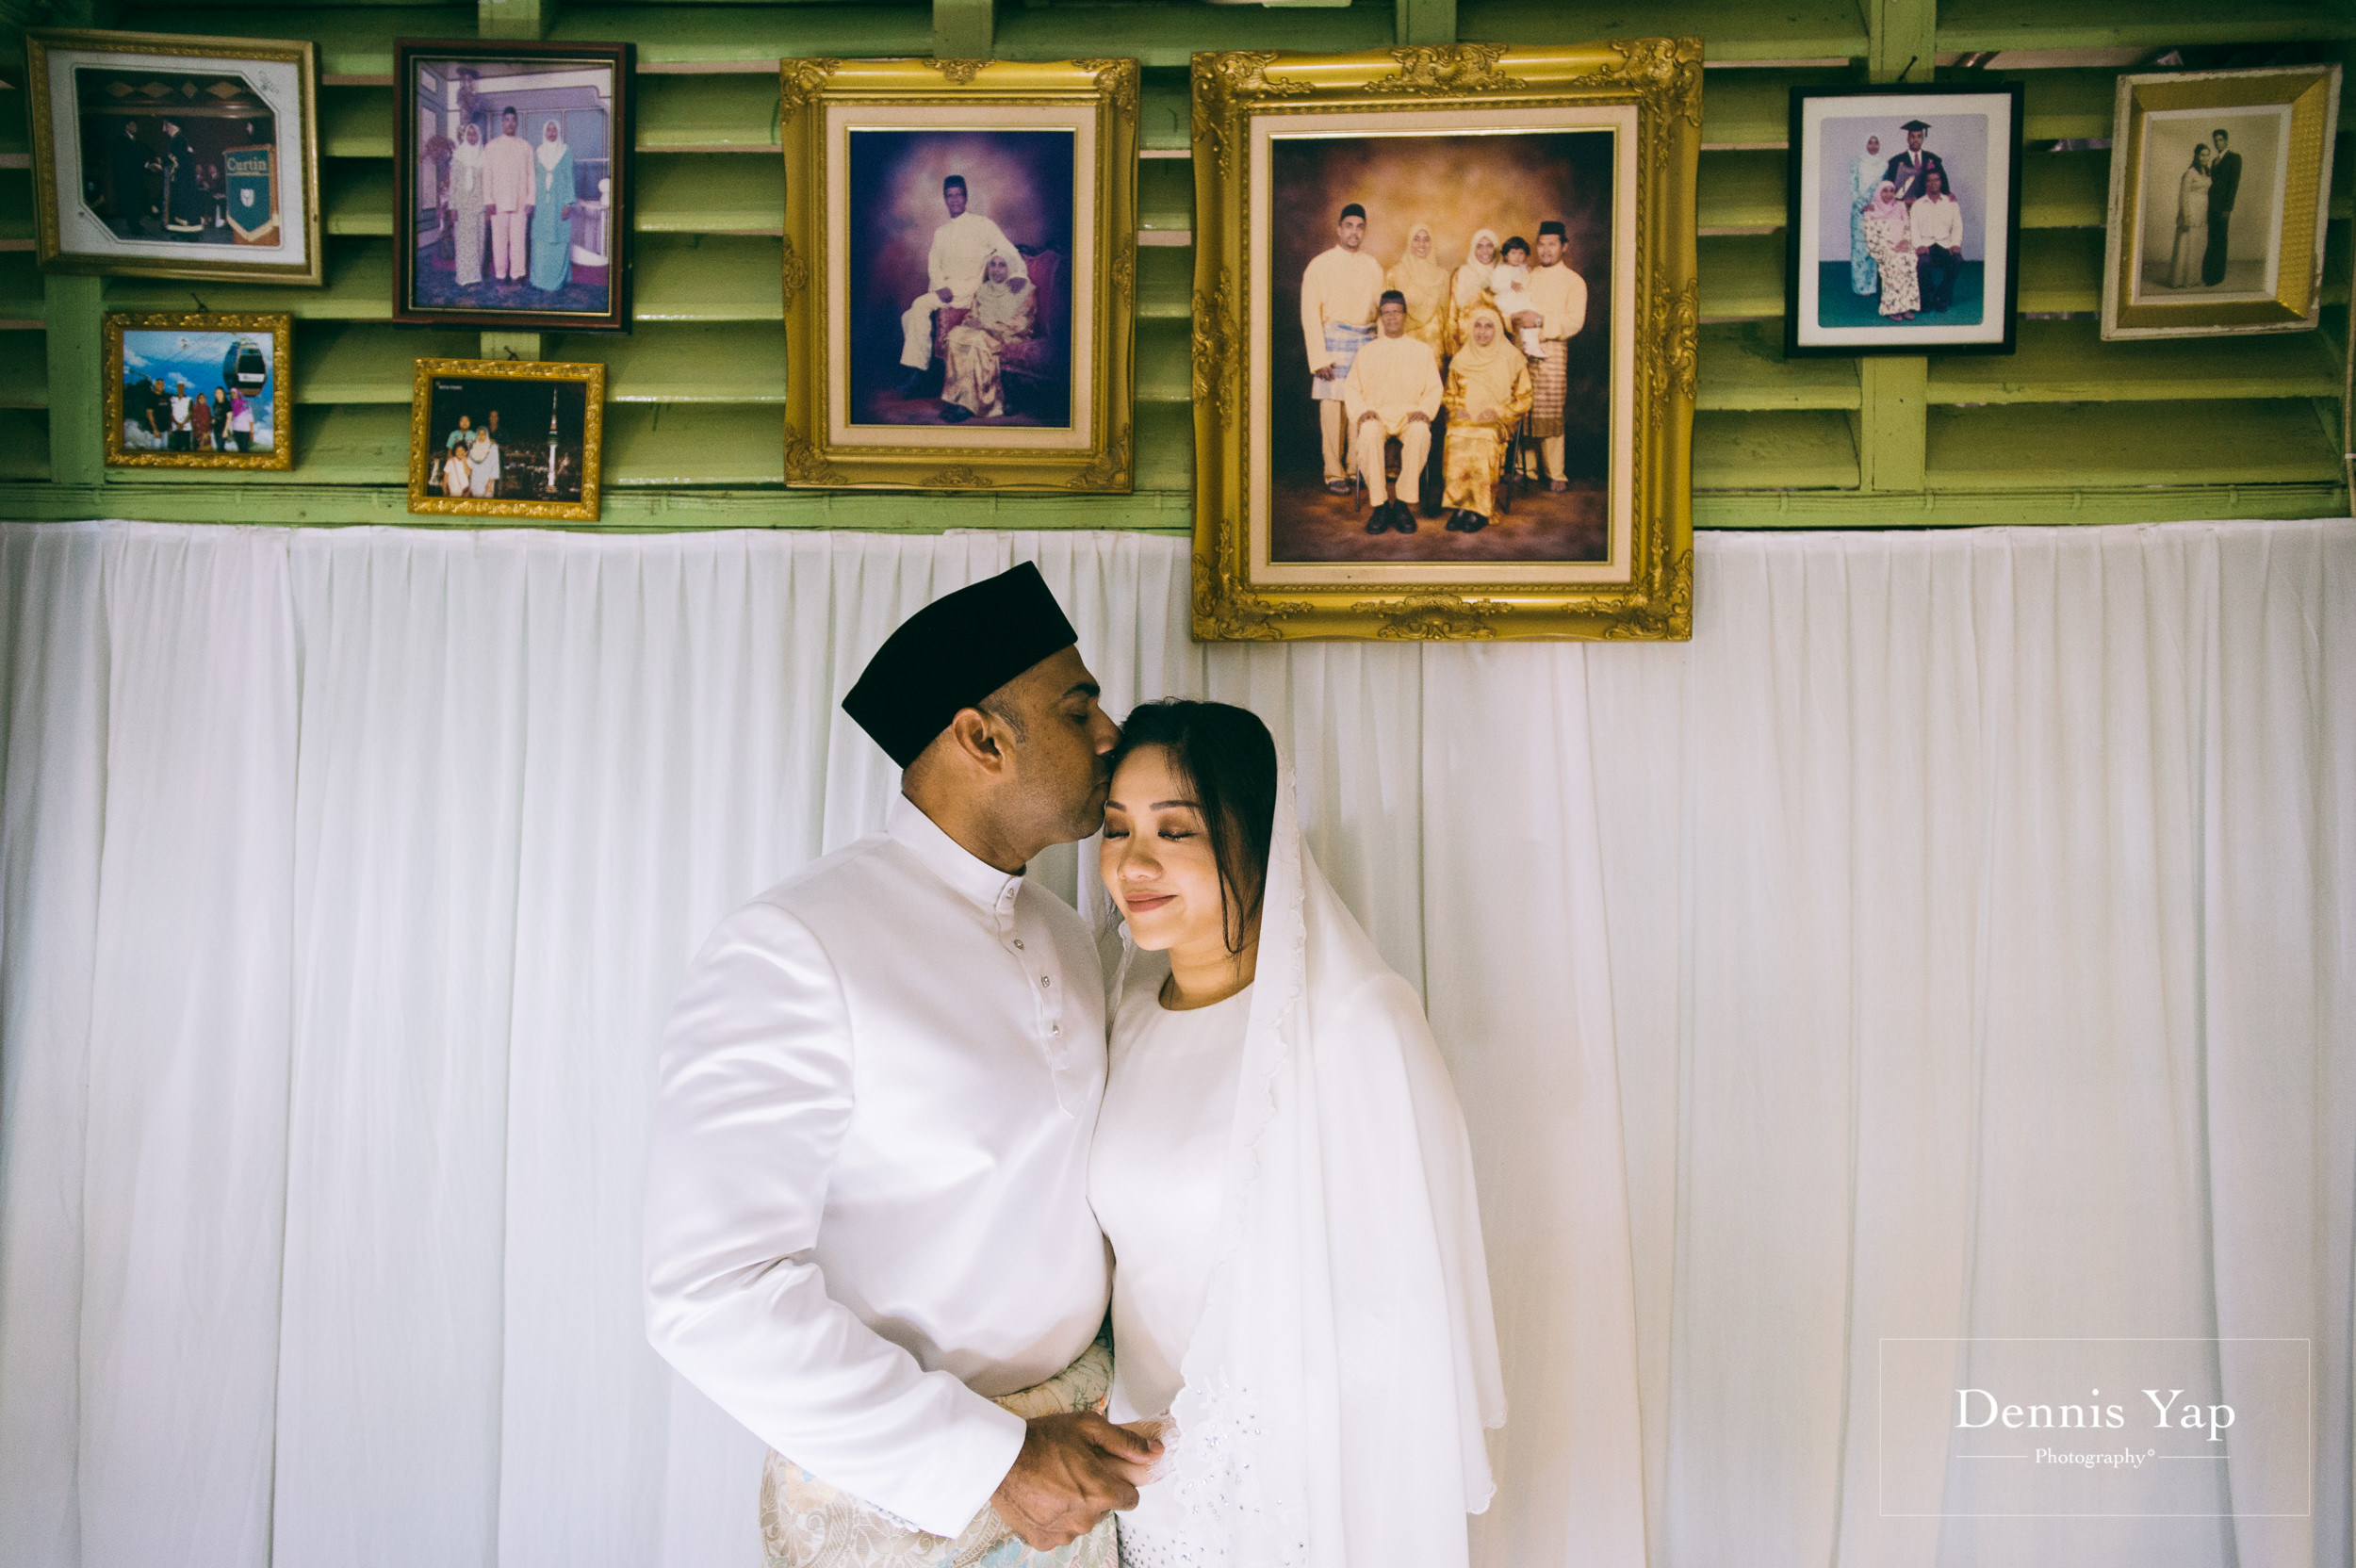 azmi nicole ahkad nikah malay traditional blessing ceremony malaysia wedding photographer dennis yap-5.jpg